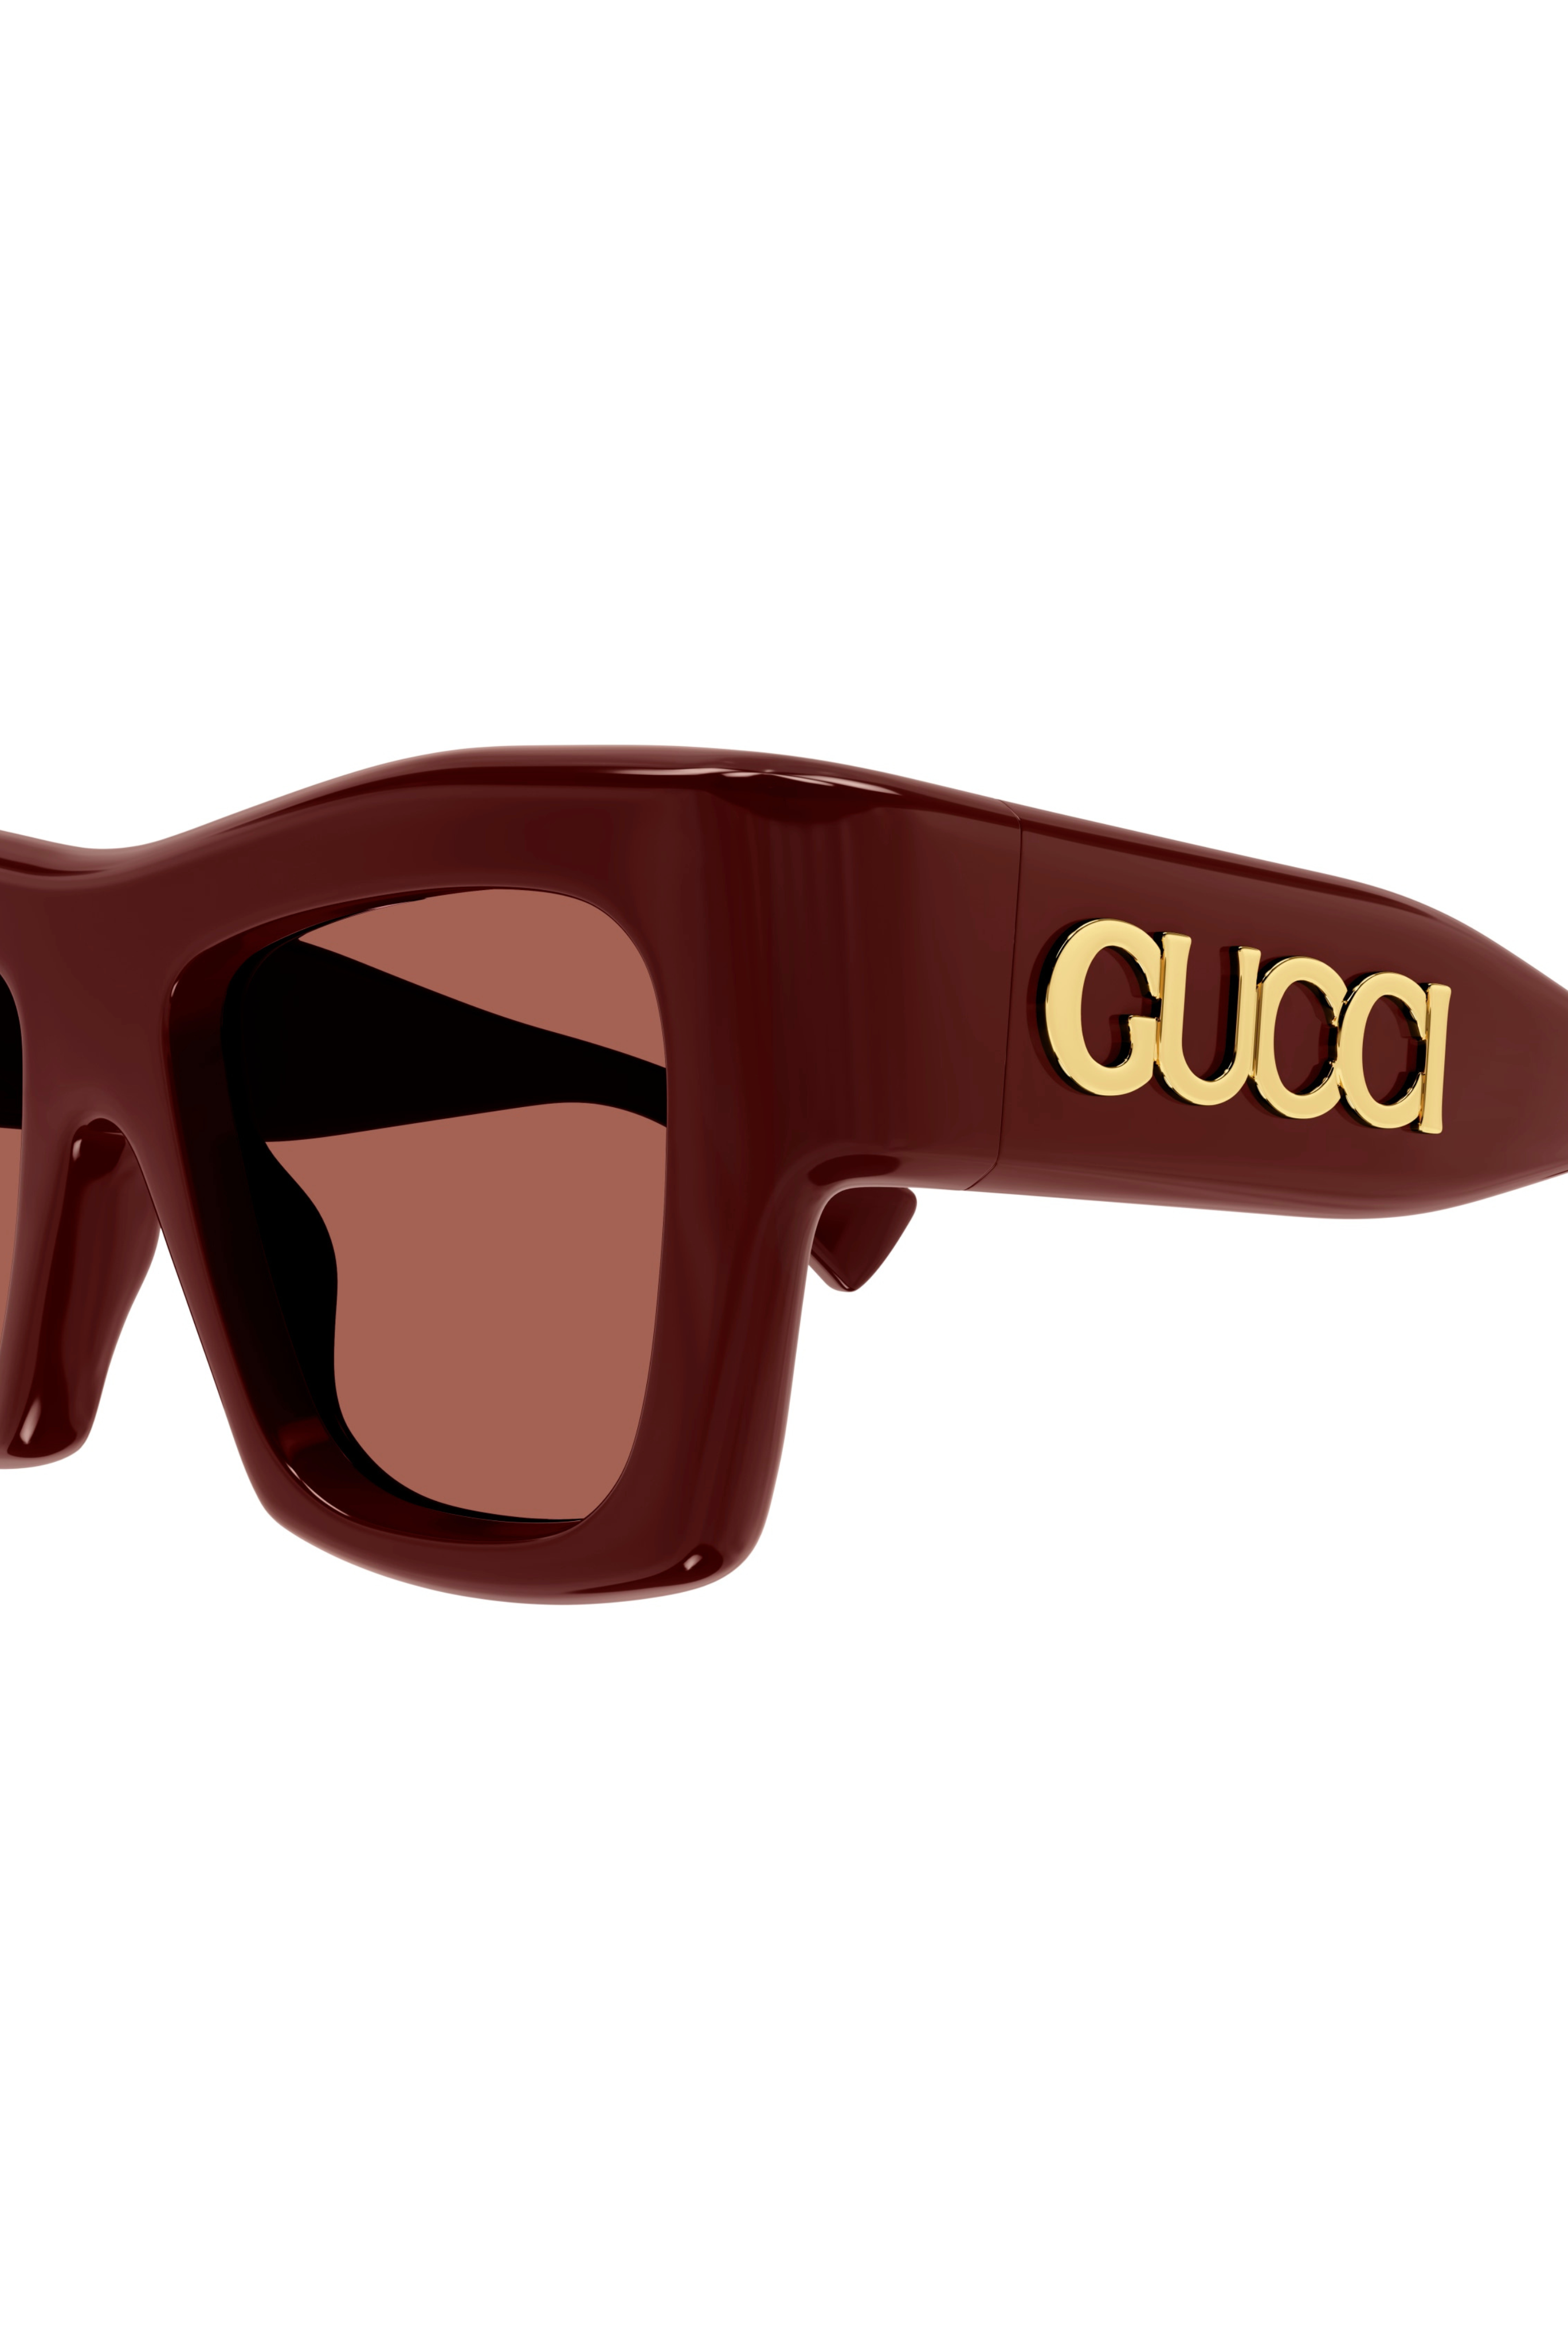 GUCCI Square Frame Sunglasses in Burgandy